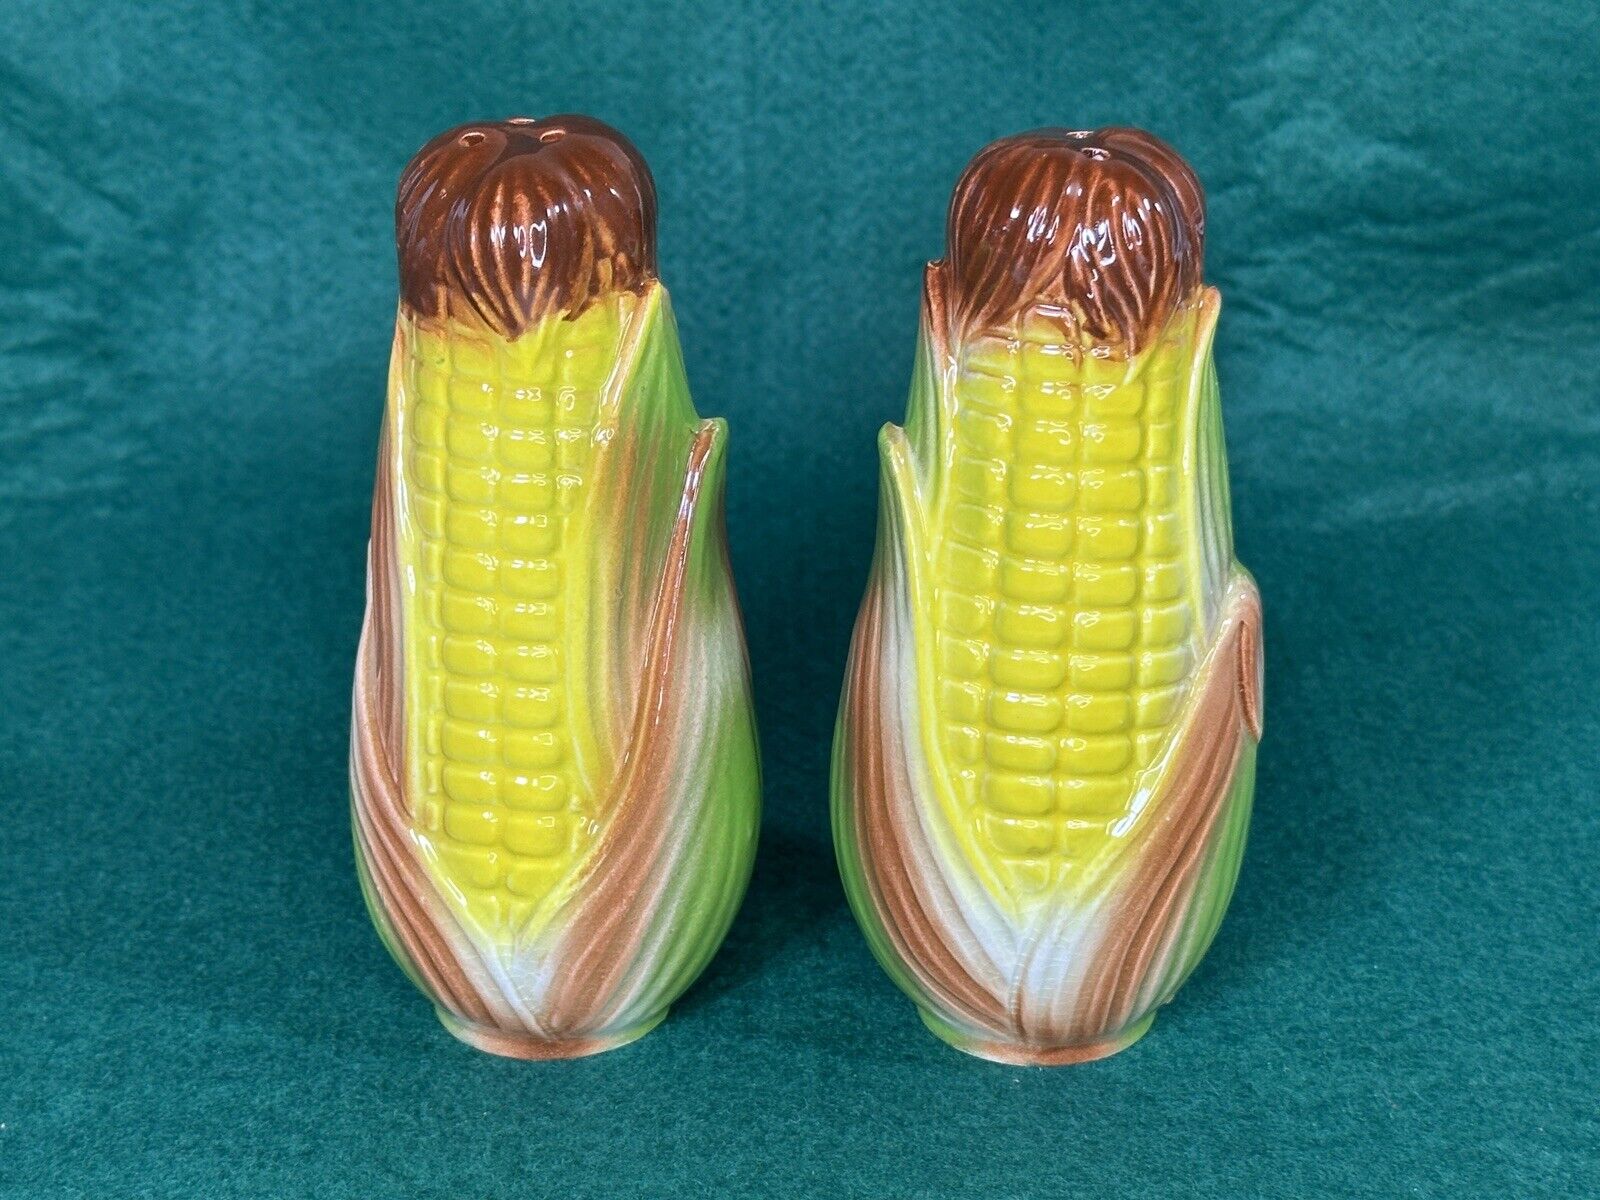 Vintage Corn On The Cob Salt And Pepper Shakers Ceramic Porcelain Farm Garden